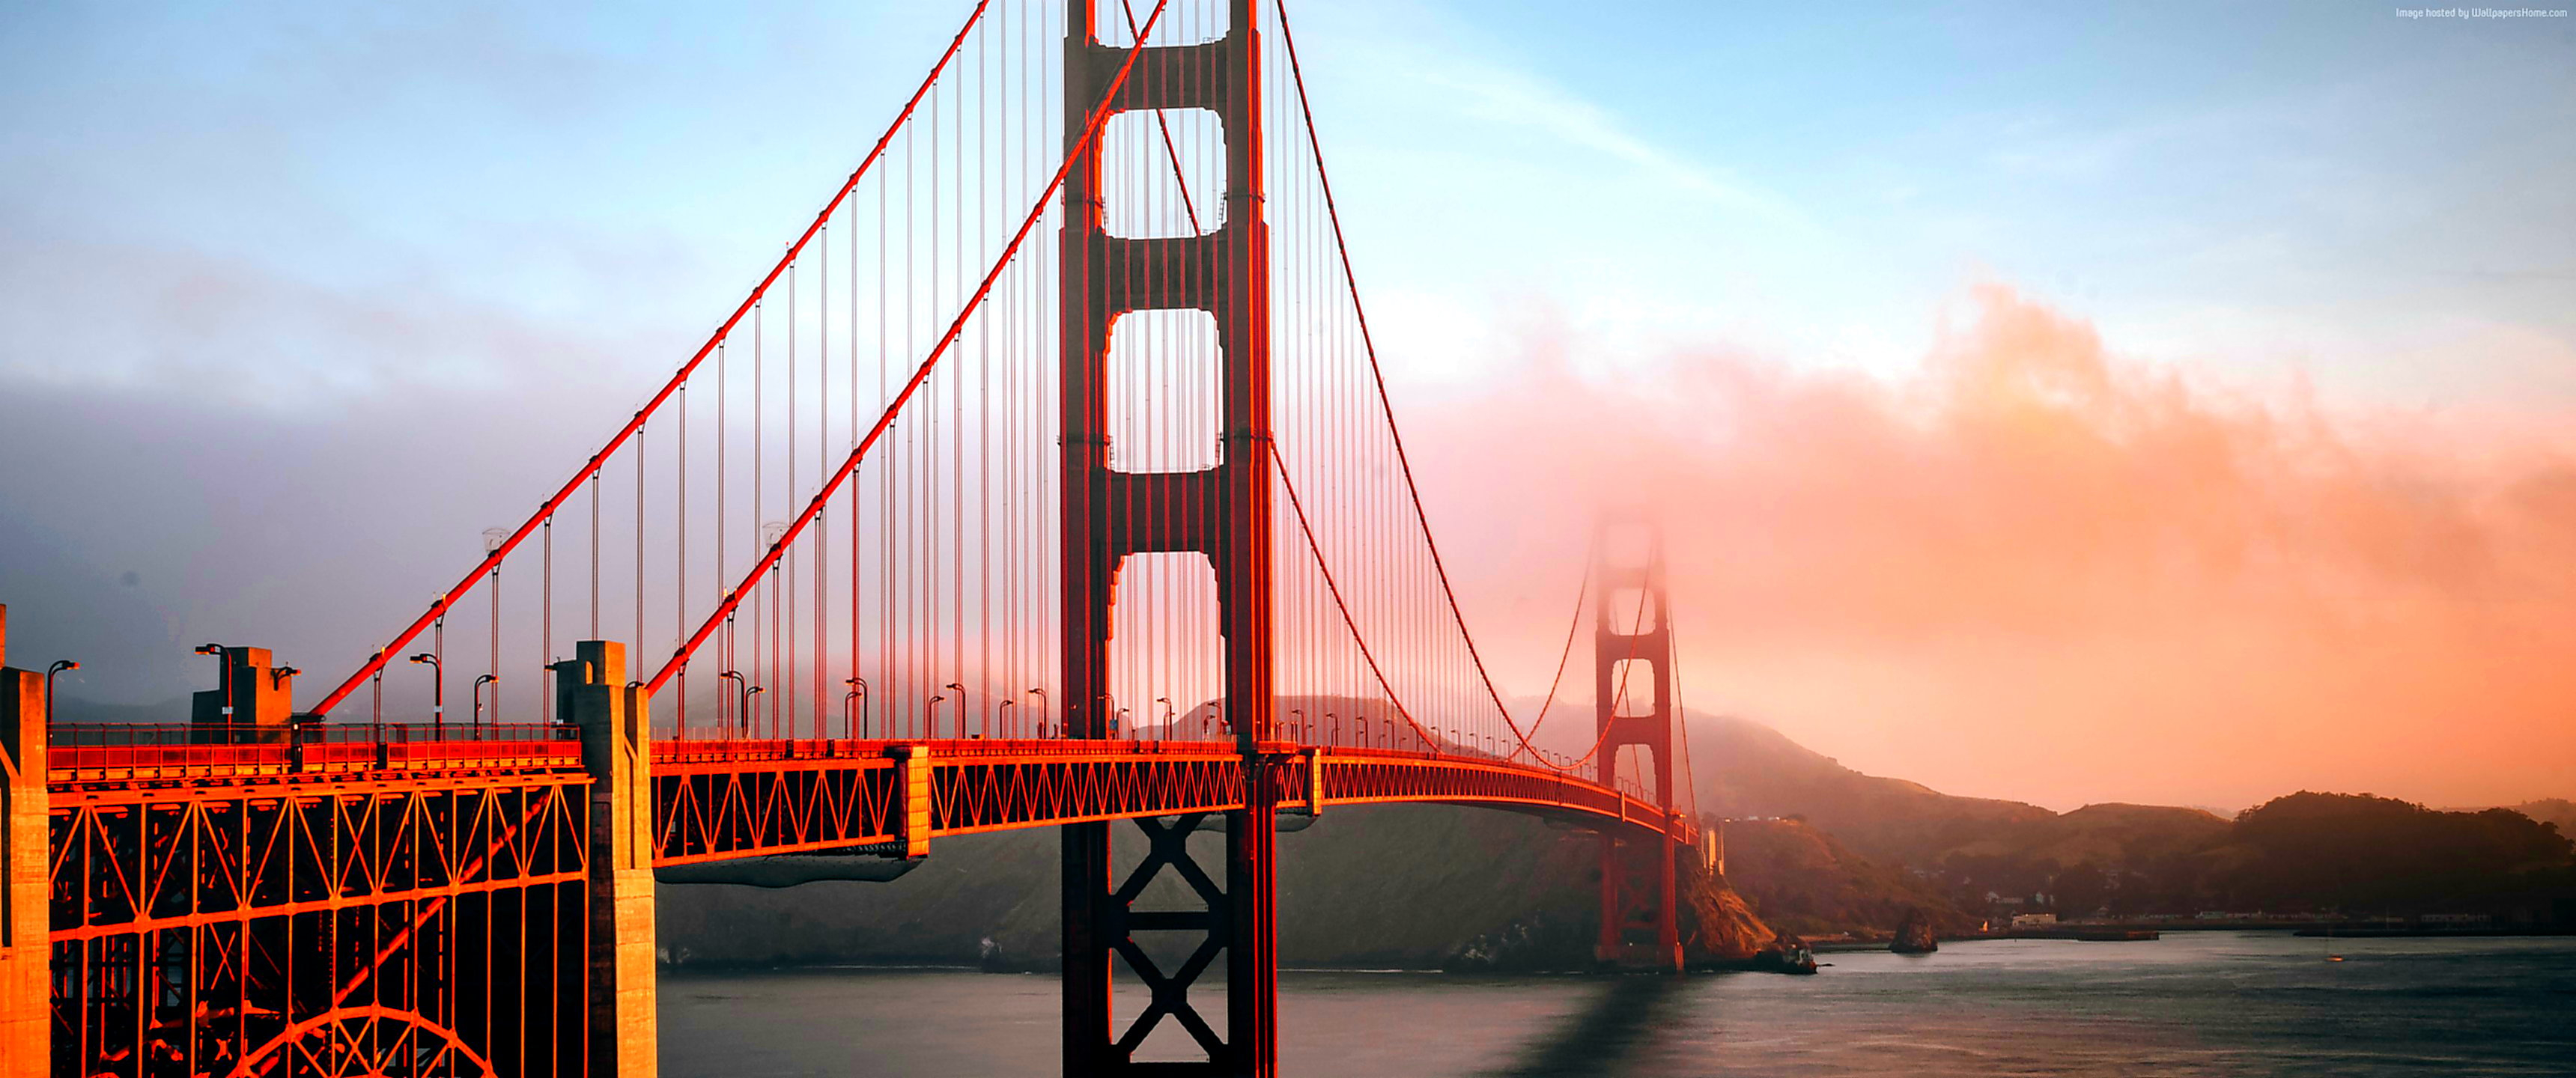 Image of the Golden Gate Bridge, San Francisco